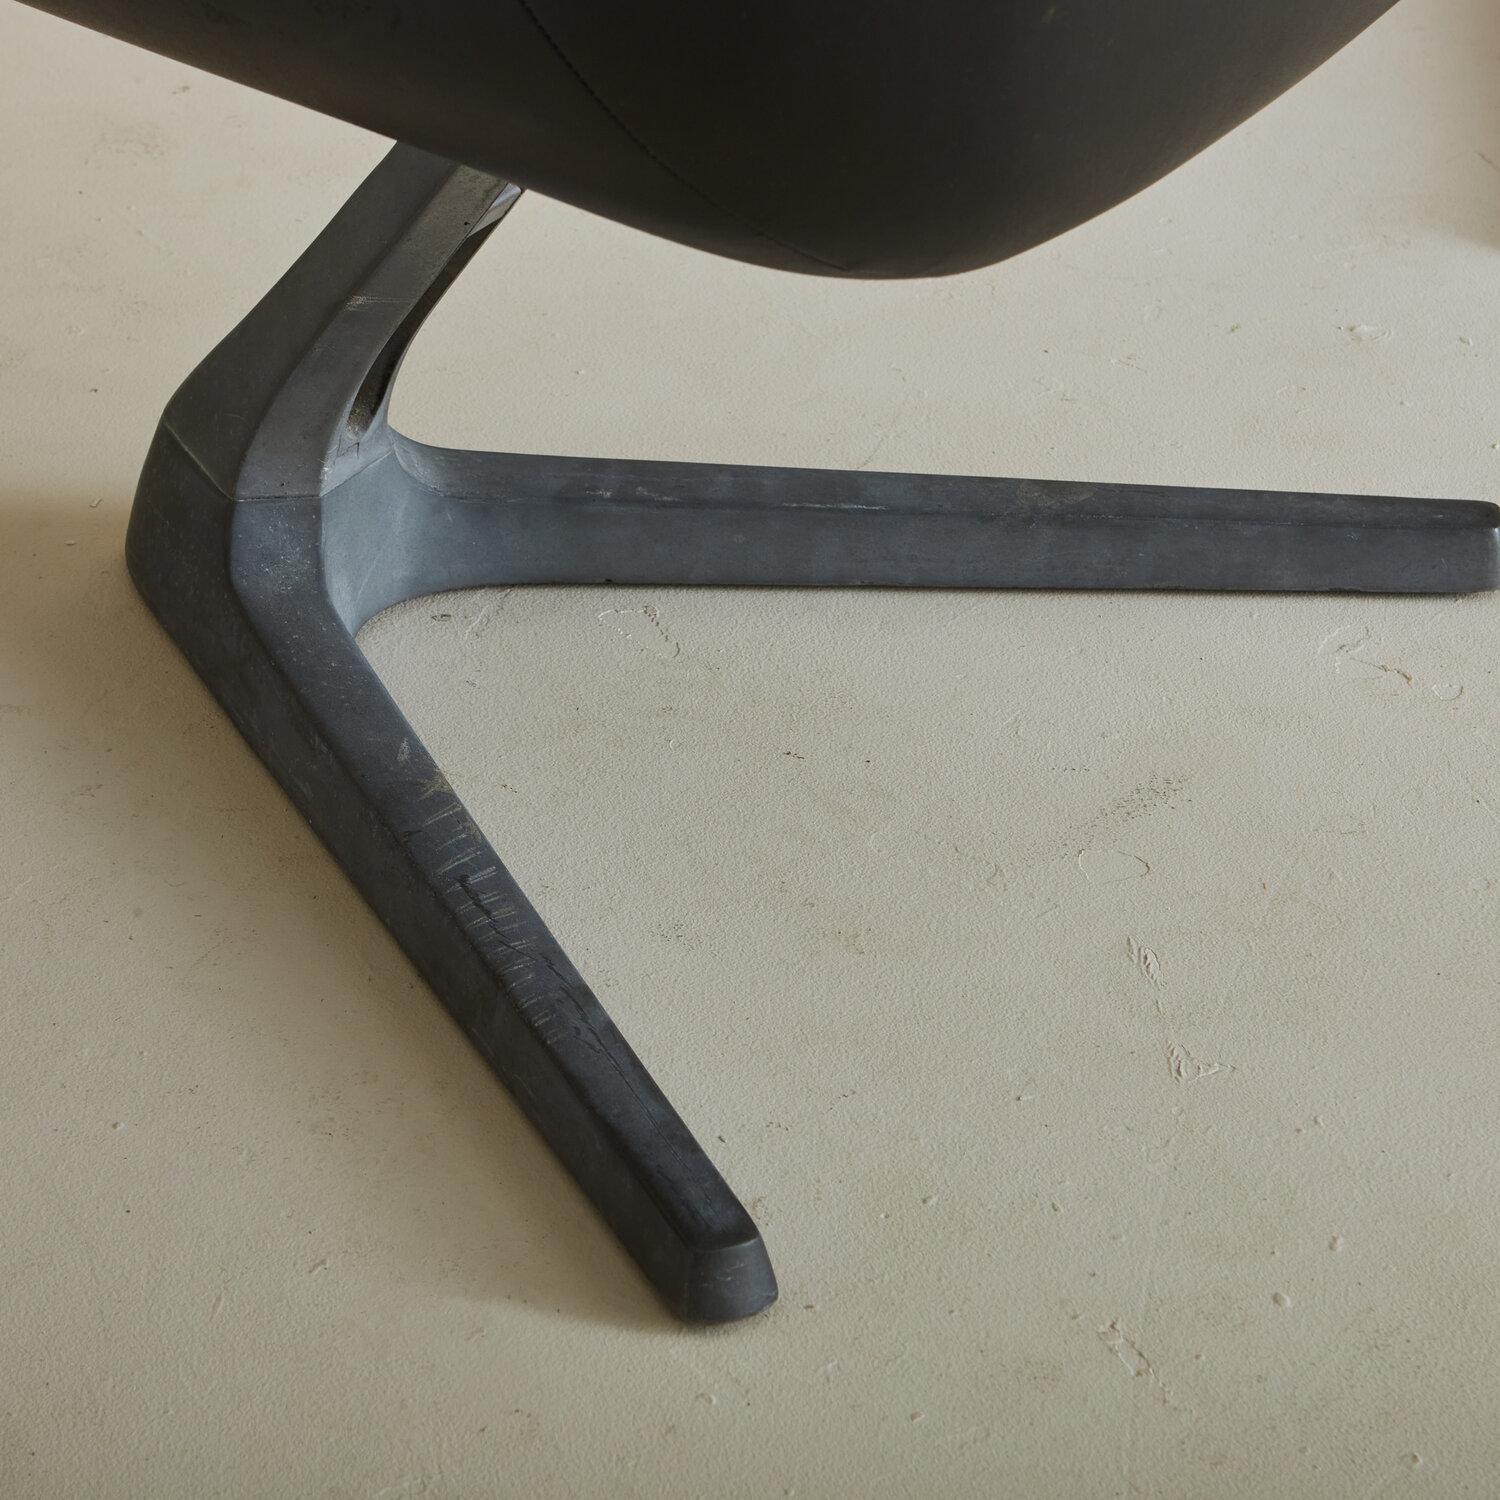 Aluminum Sculpta 'Star Trek' Swivel Chair by Chromcraft, 1960s '3 Available'